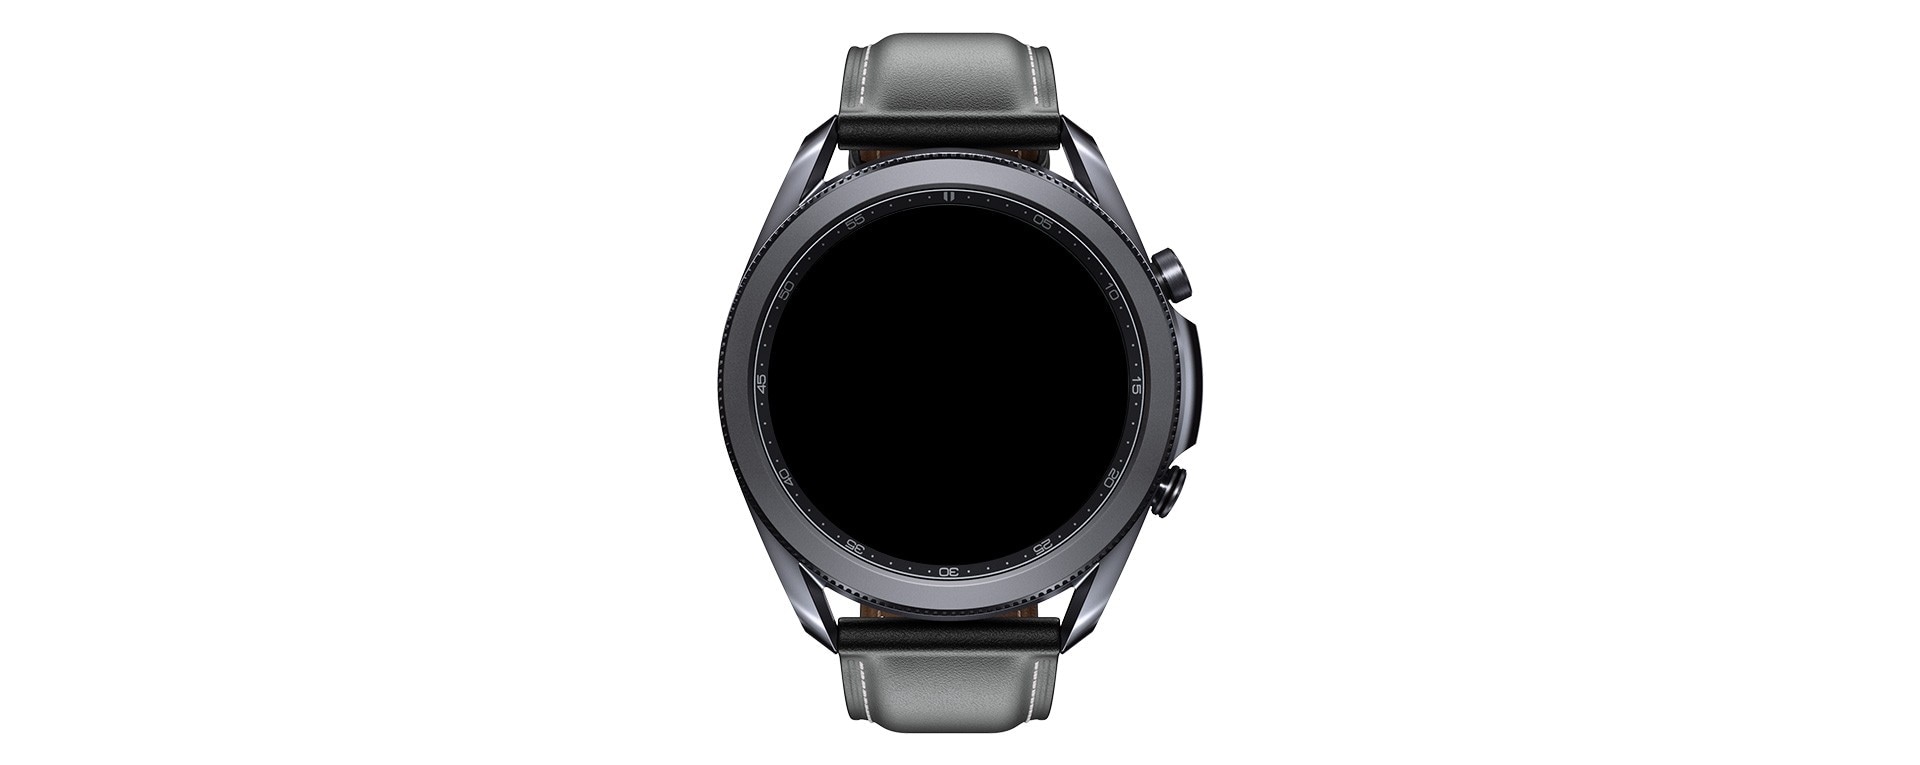 ba feature galaxy watch3 bluetooth 41mm 24 275070767?$ORIGIN JPG$